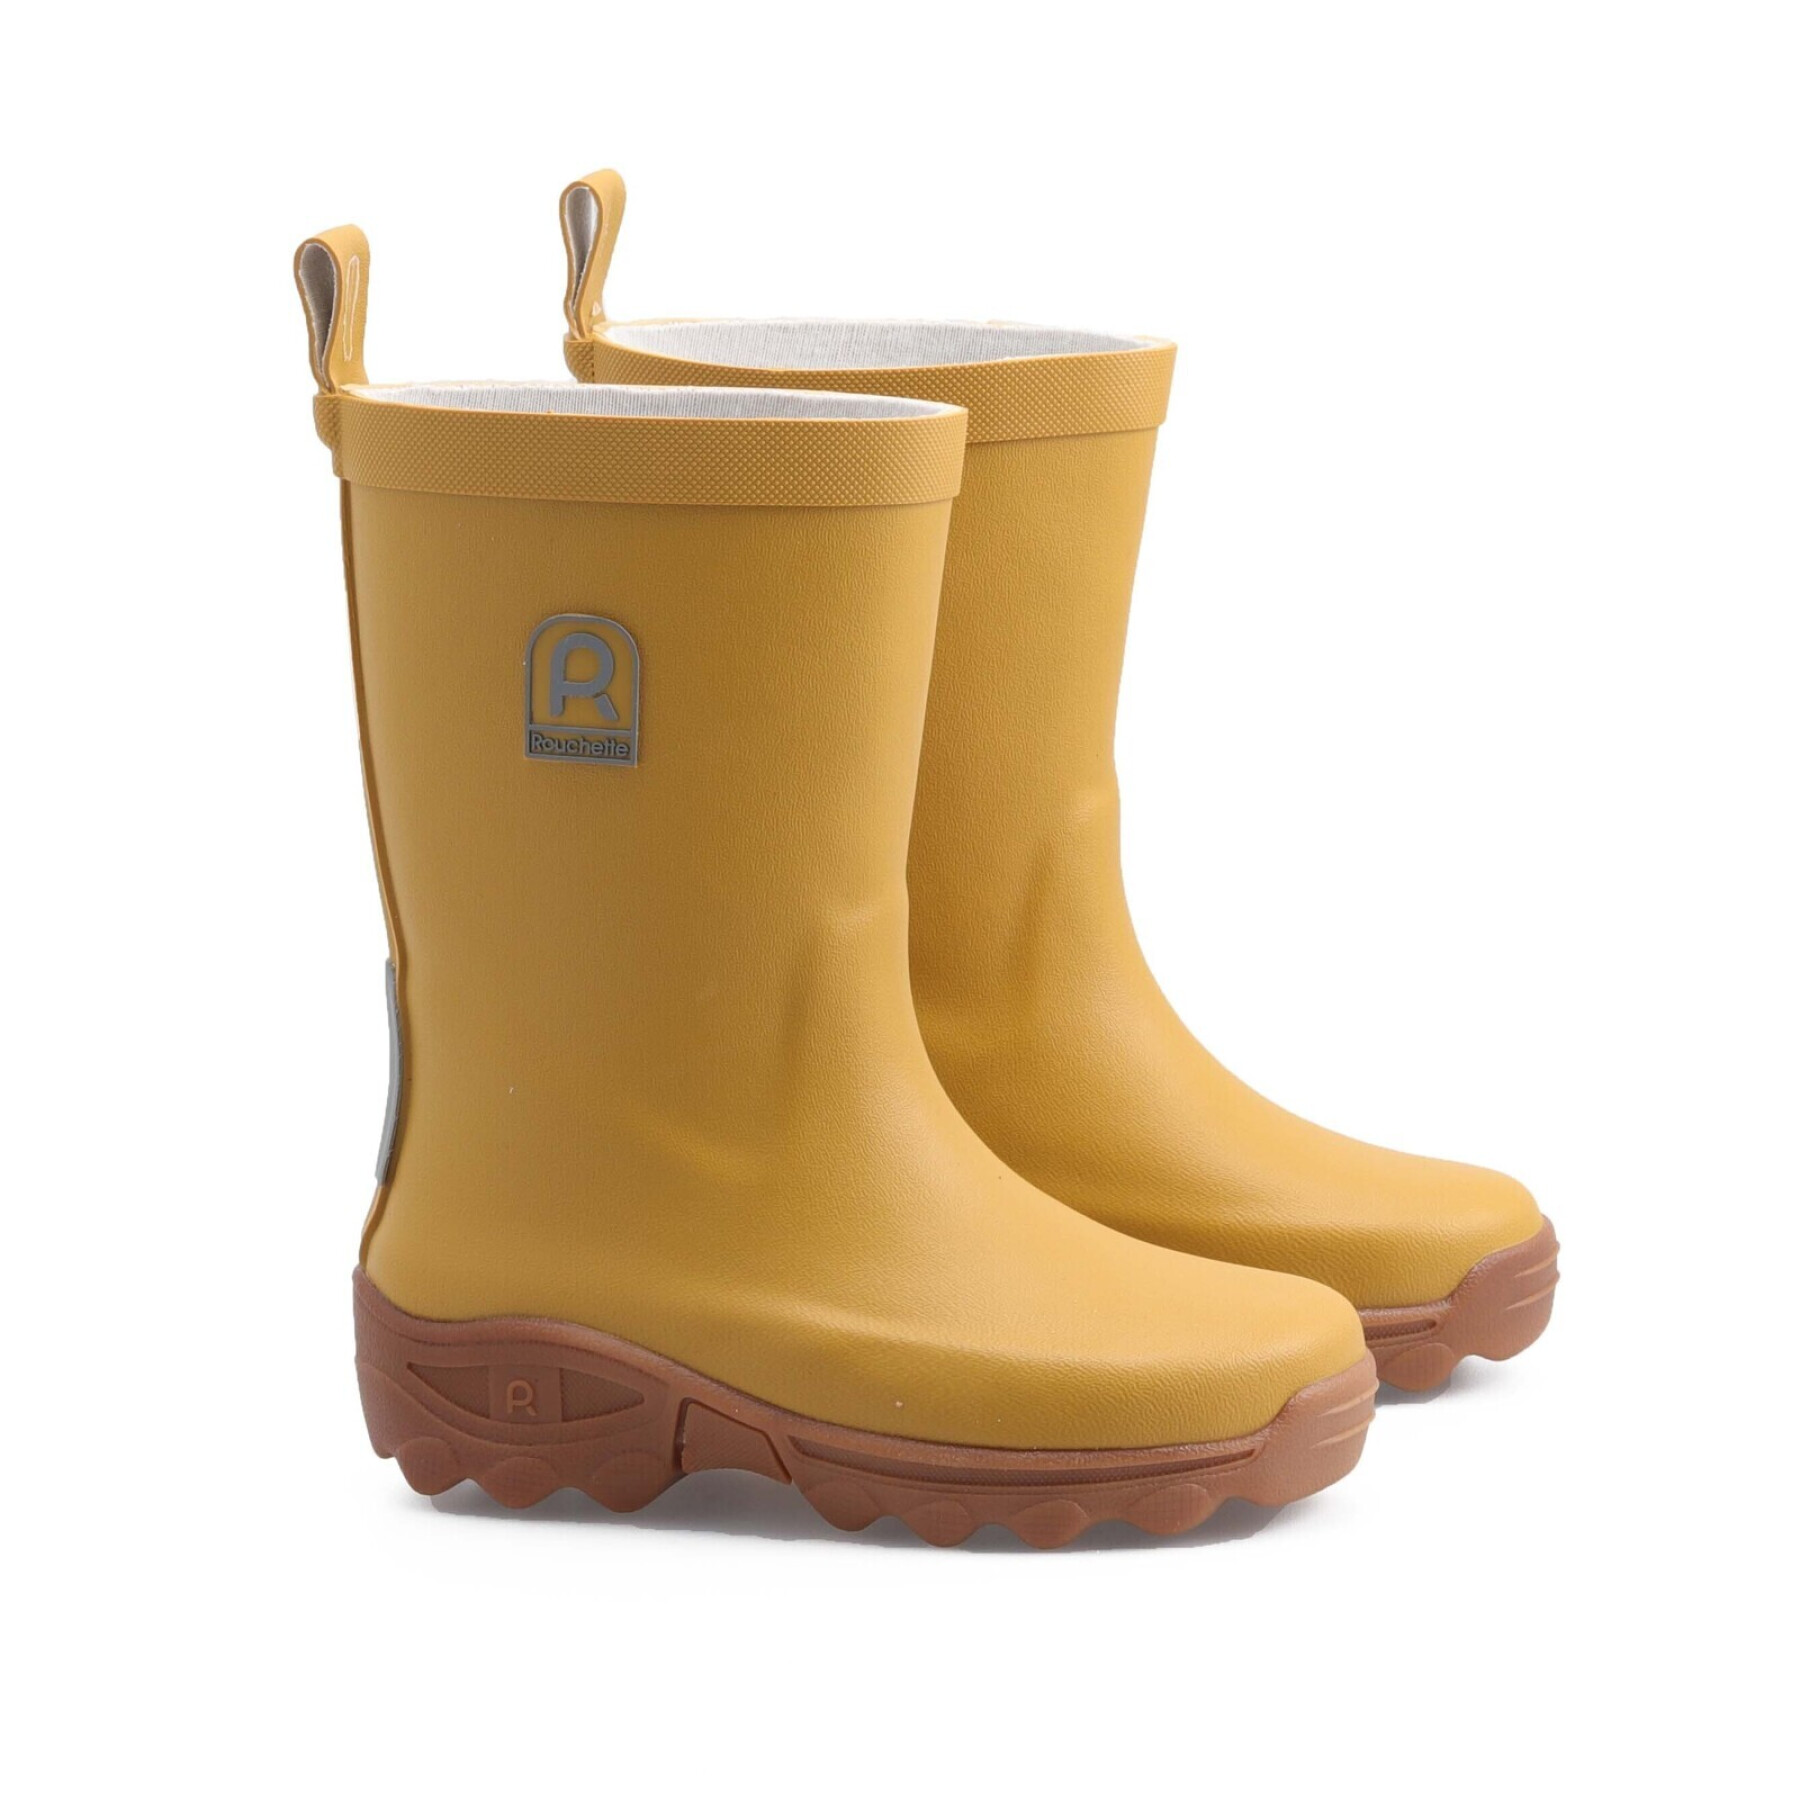 Children's rain boots Rouchette Clean